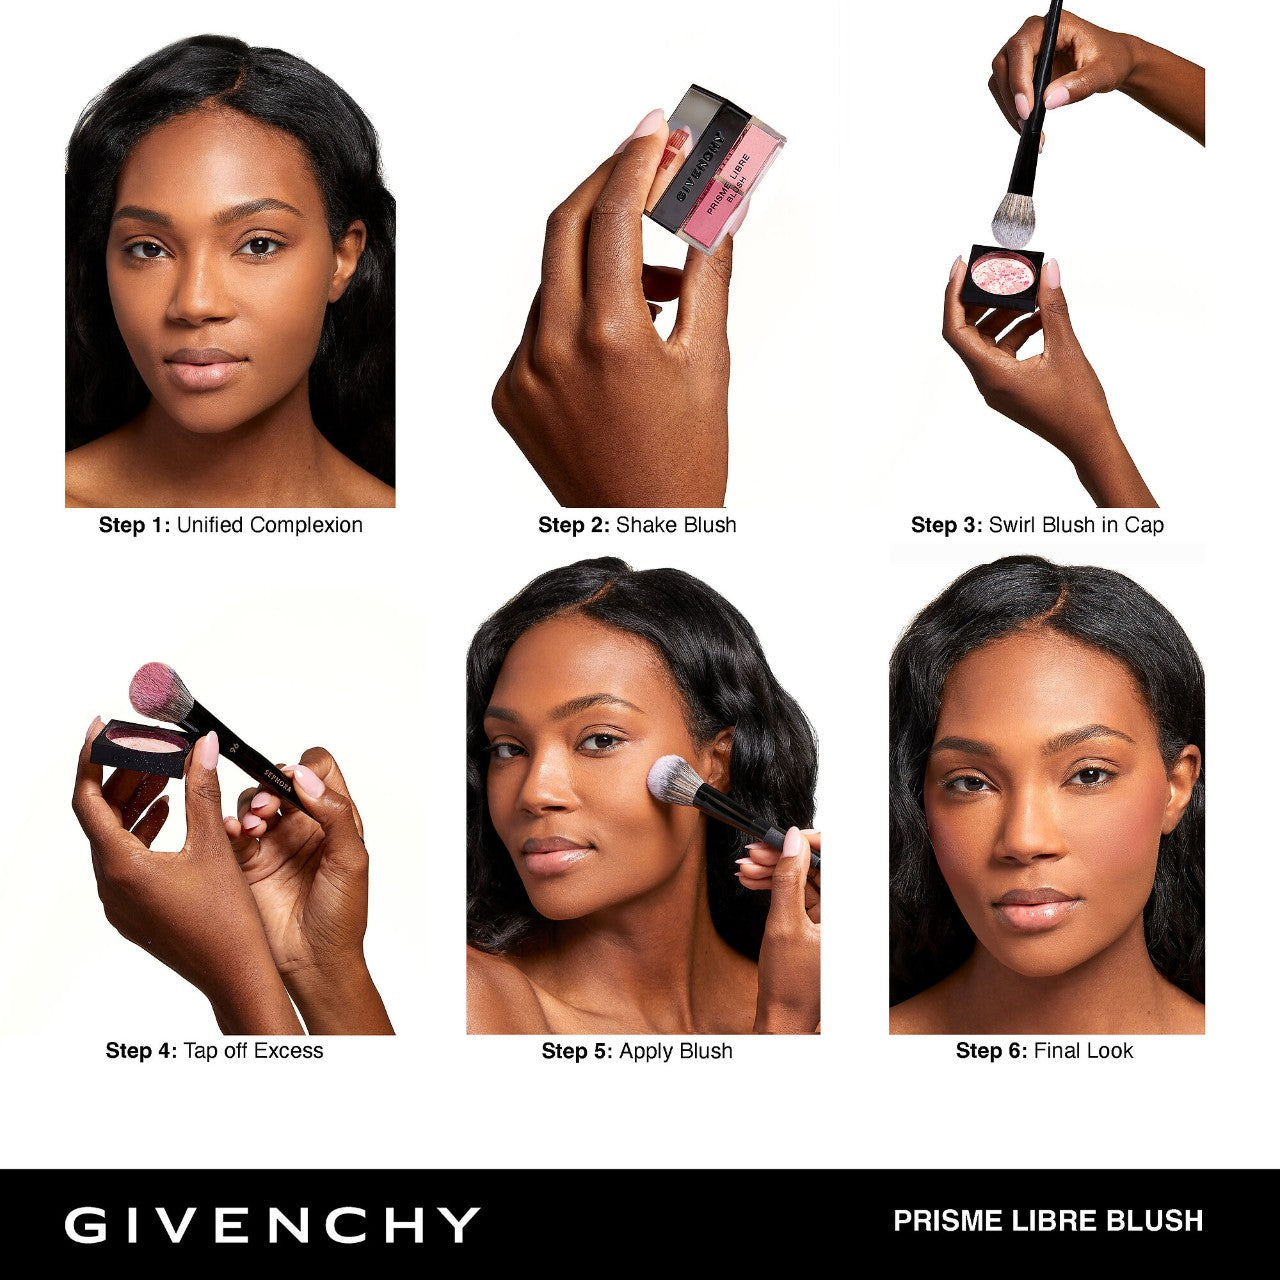 Pre Venta: Givenchy | Prisme Libre Loose Powder Blush 12H Radiance | Taffetas Rosé